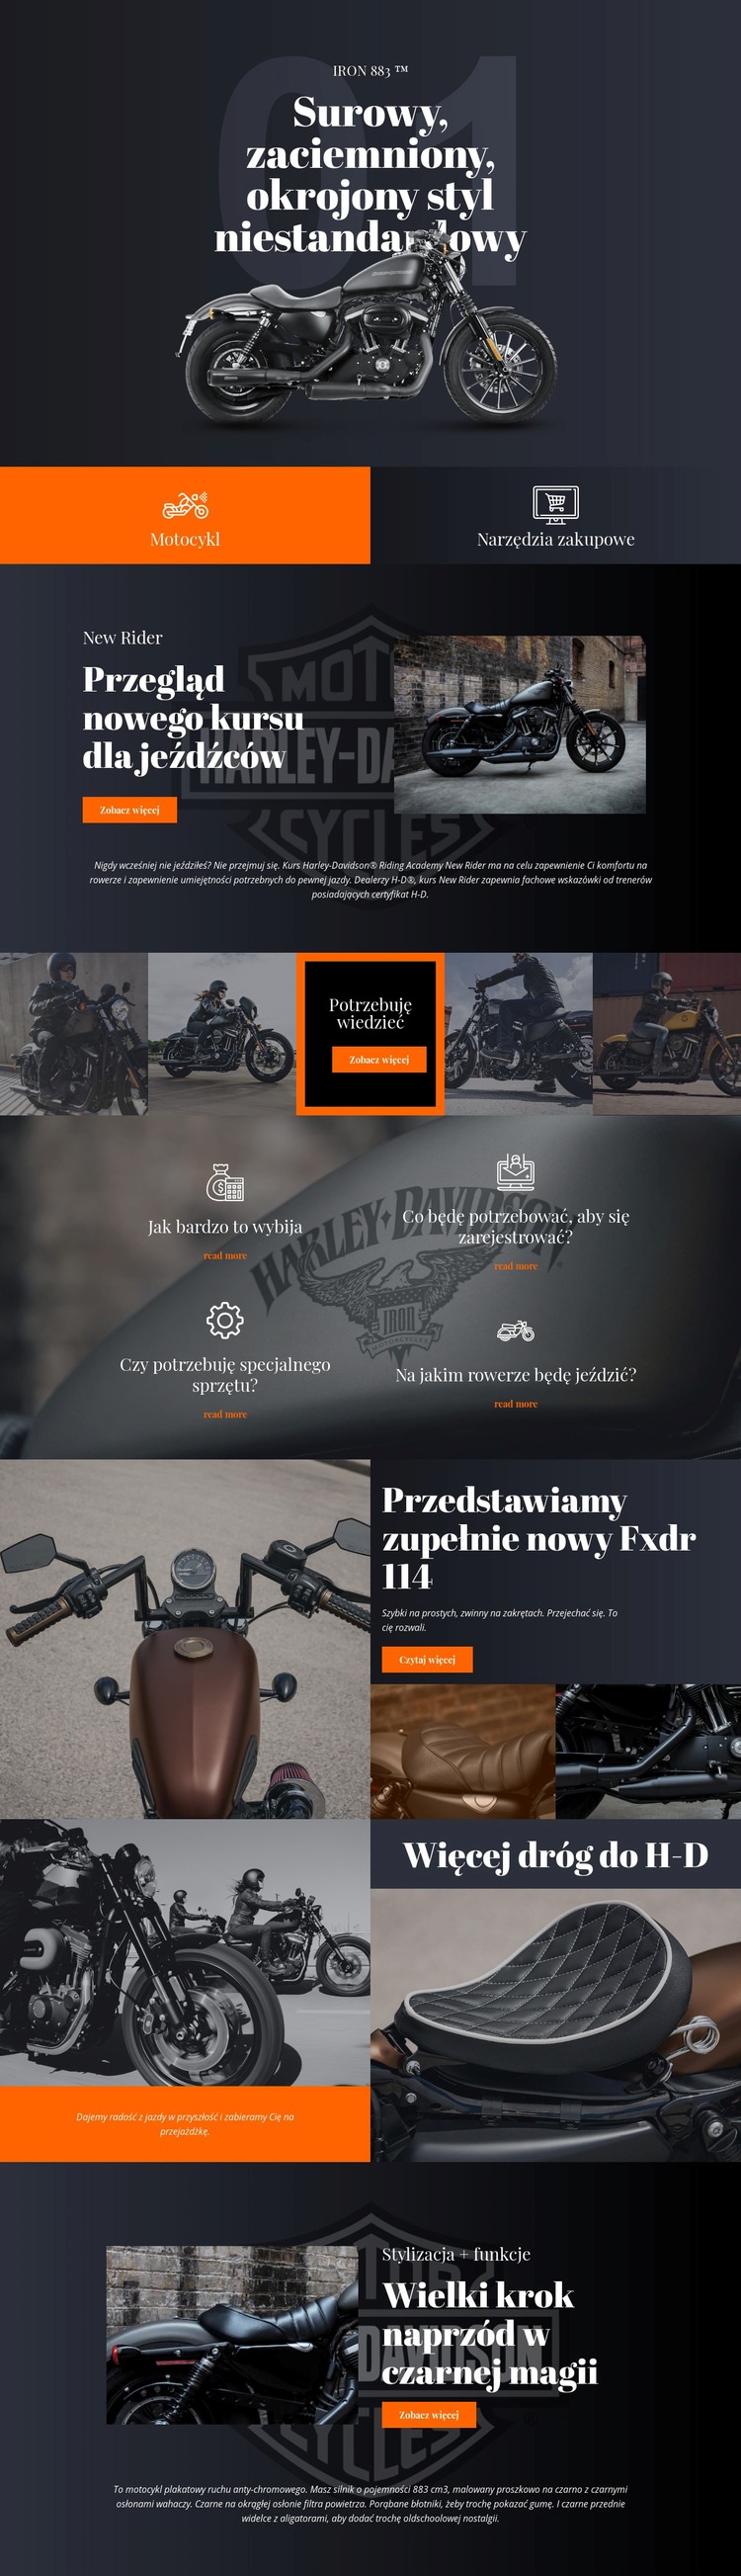 Harley Davidson Szablon HTML5